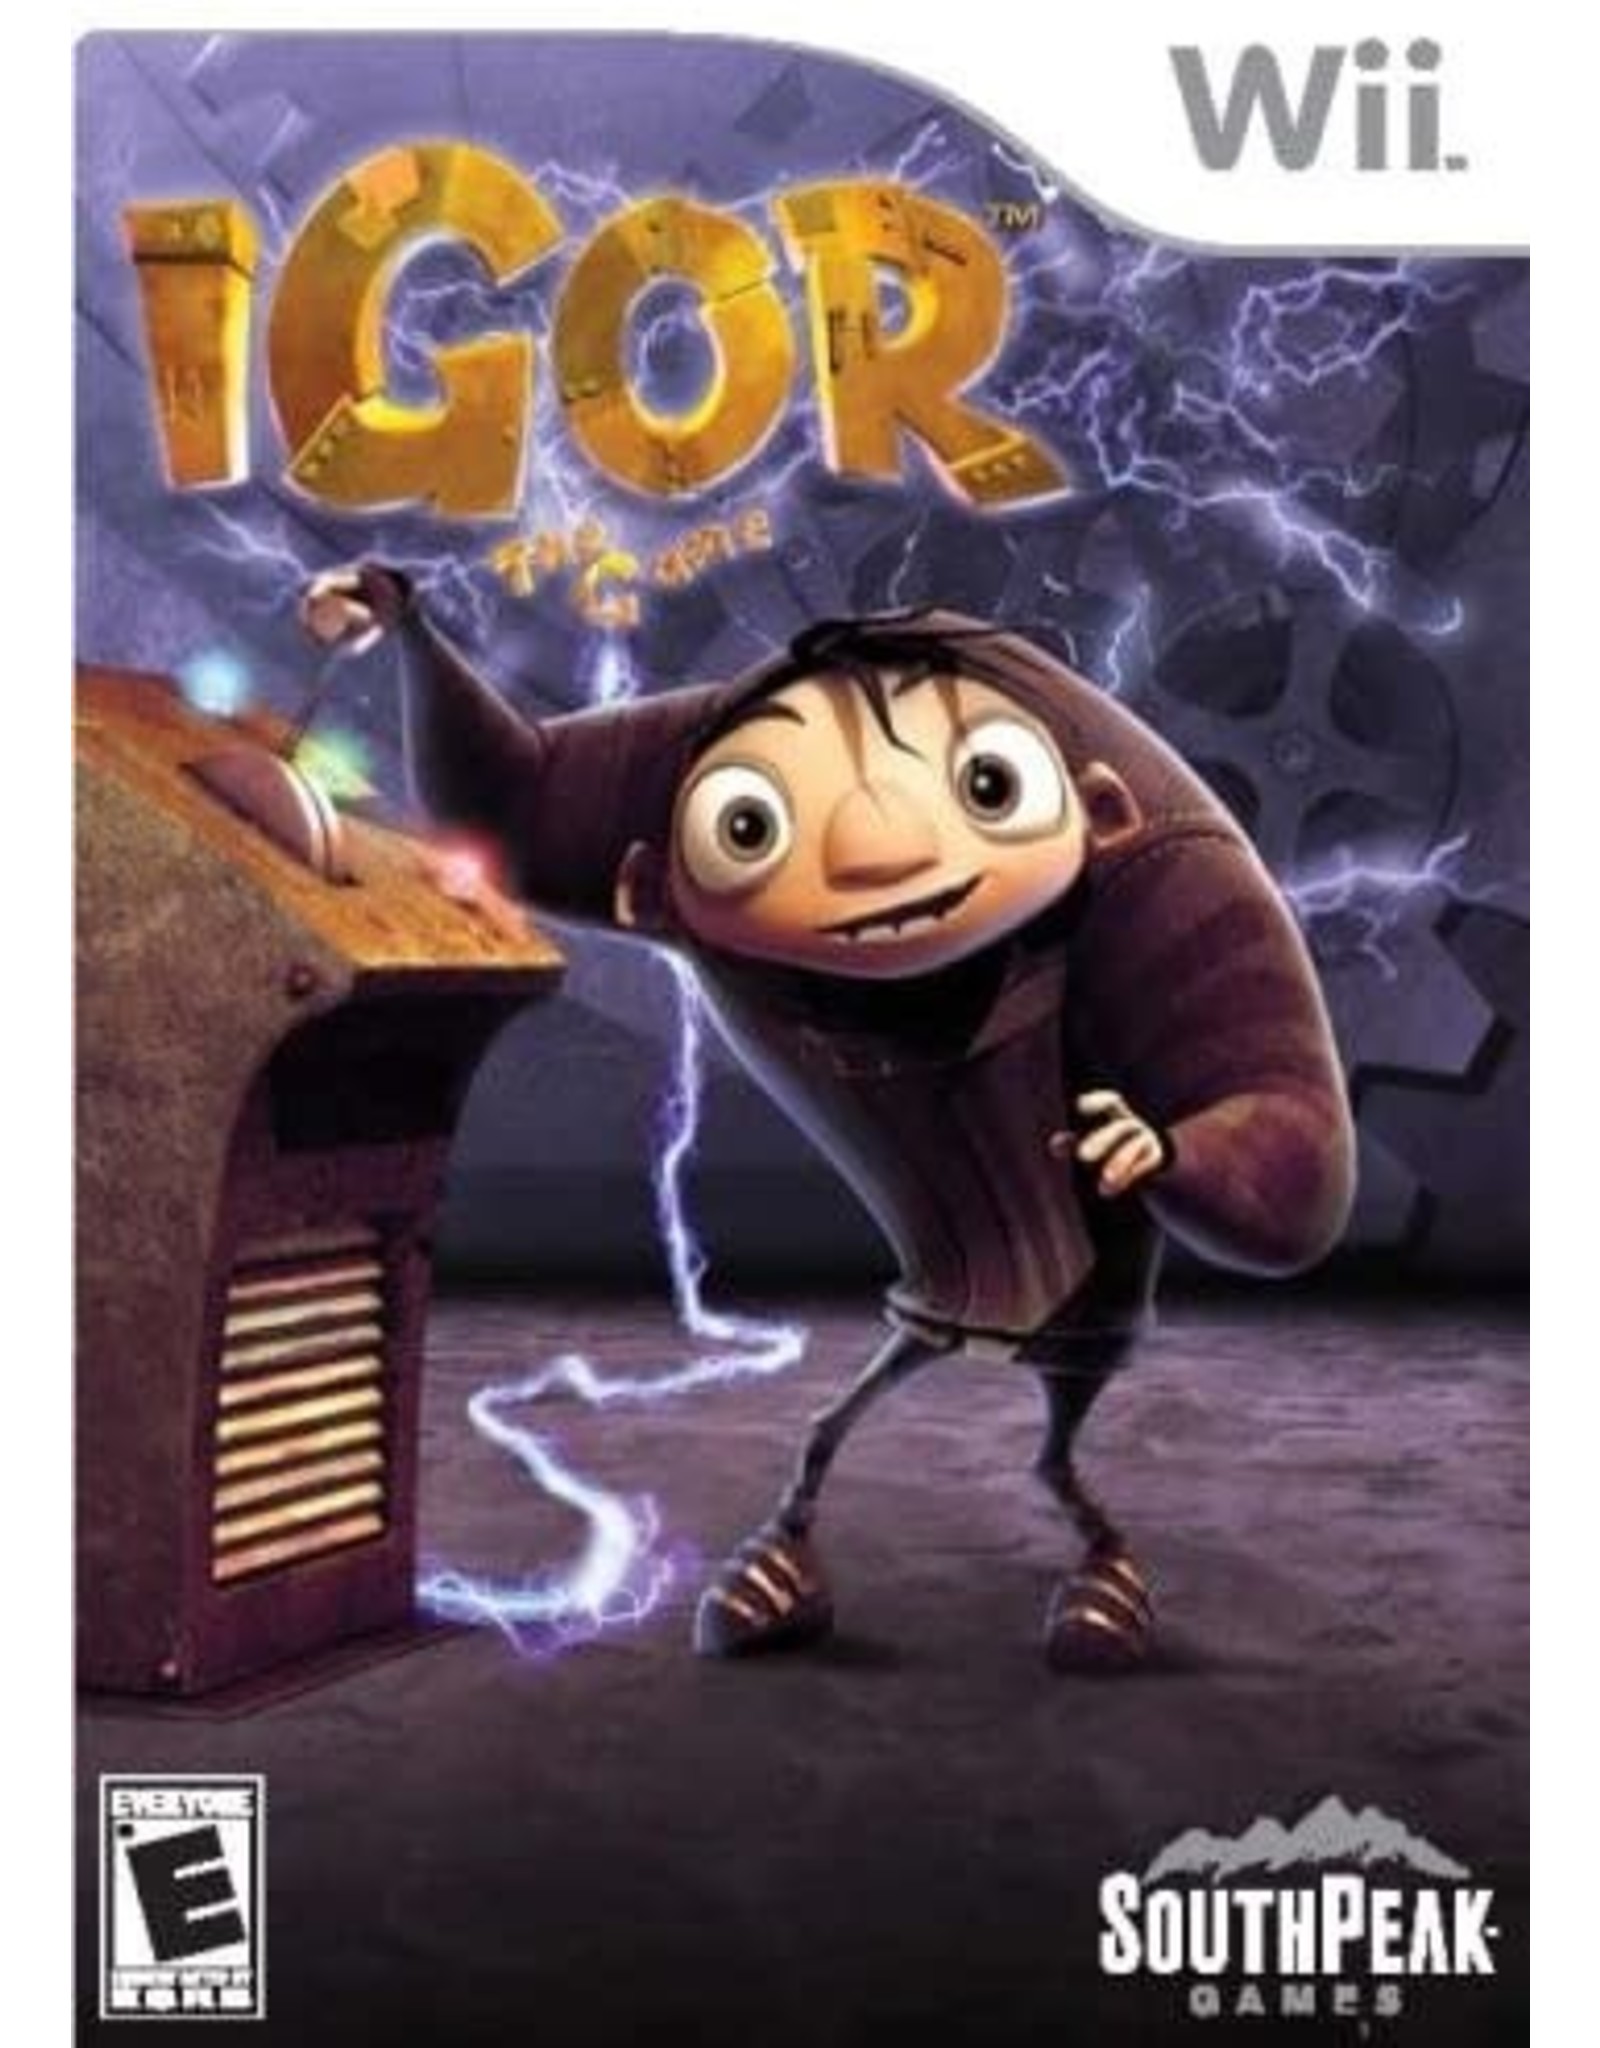 Wii Igor The Game (CiB)